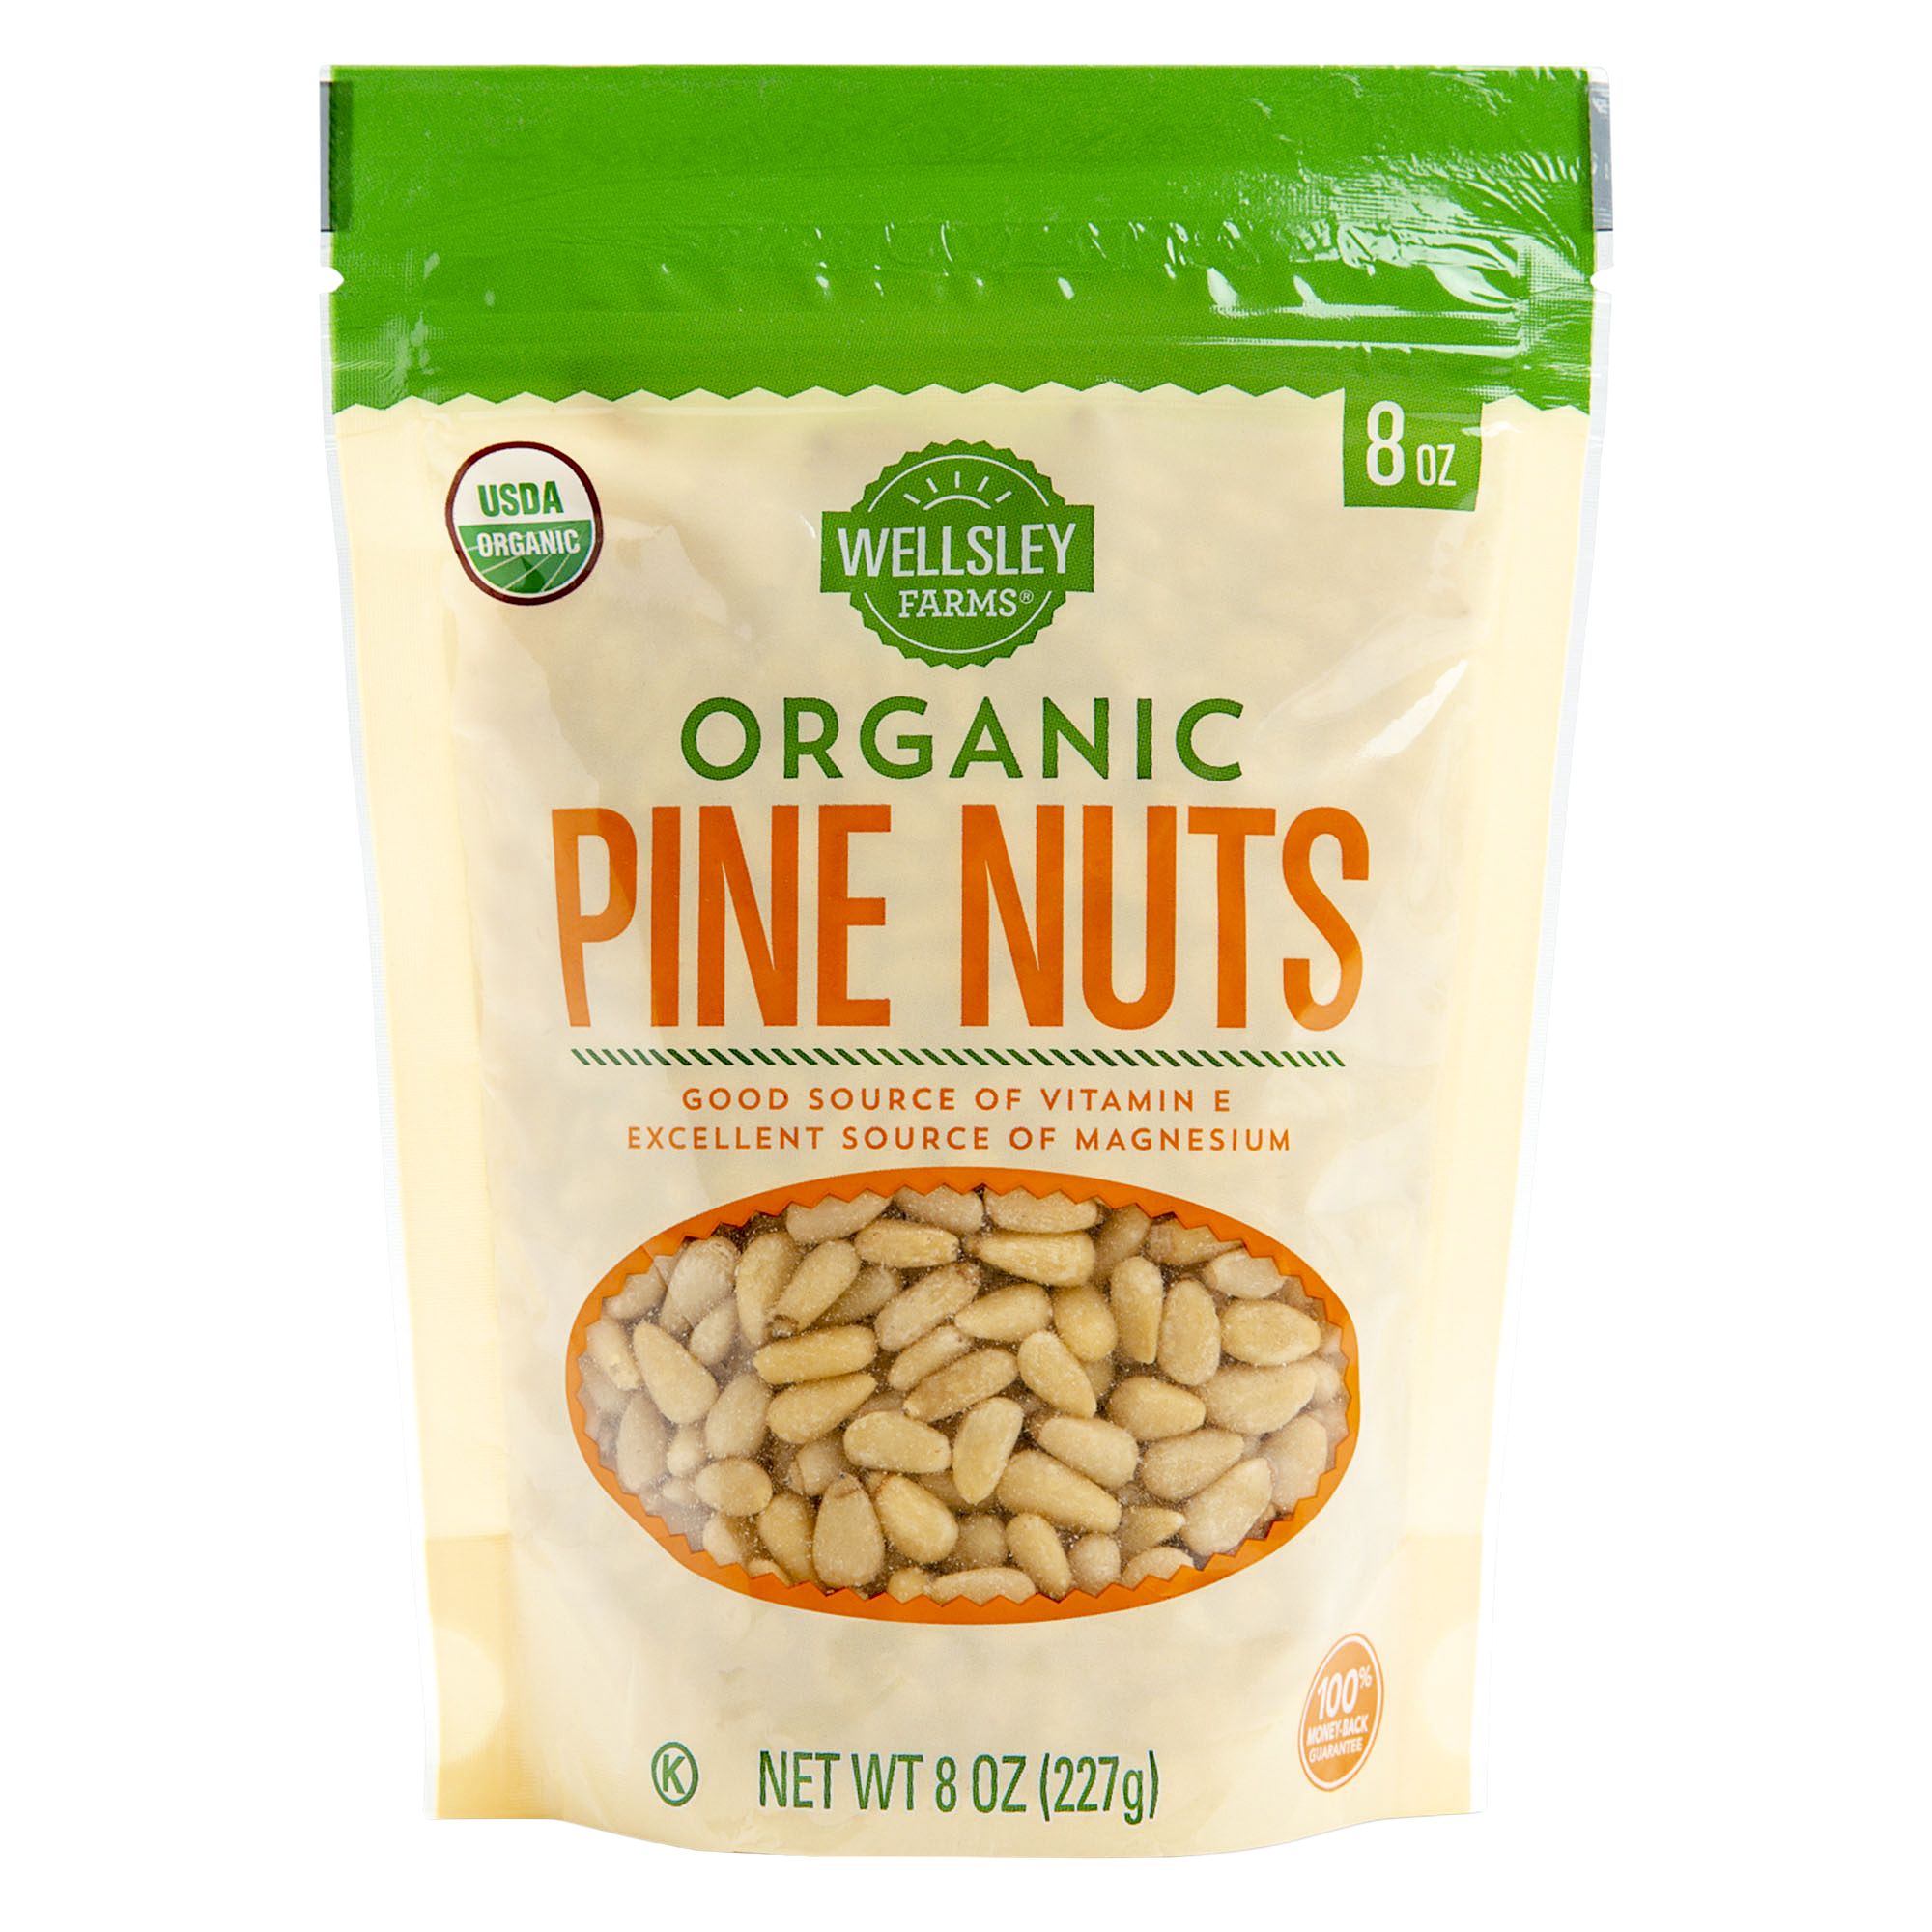 Wellsley Farms Organic Pine Nuts, 8 oz.